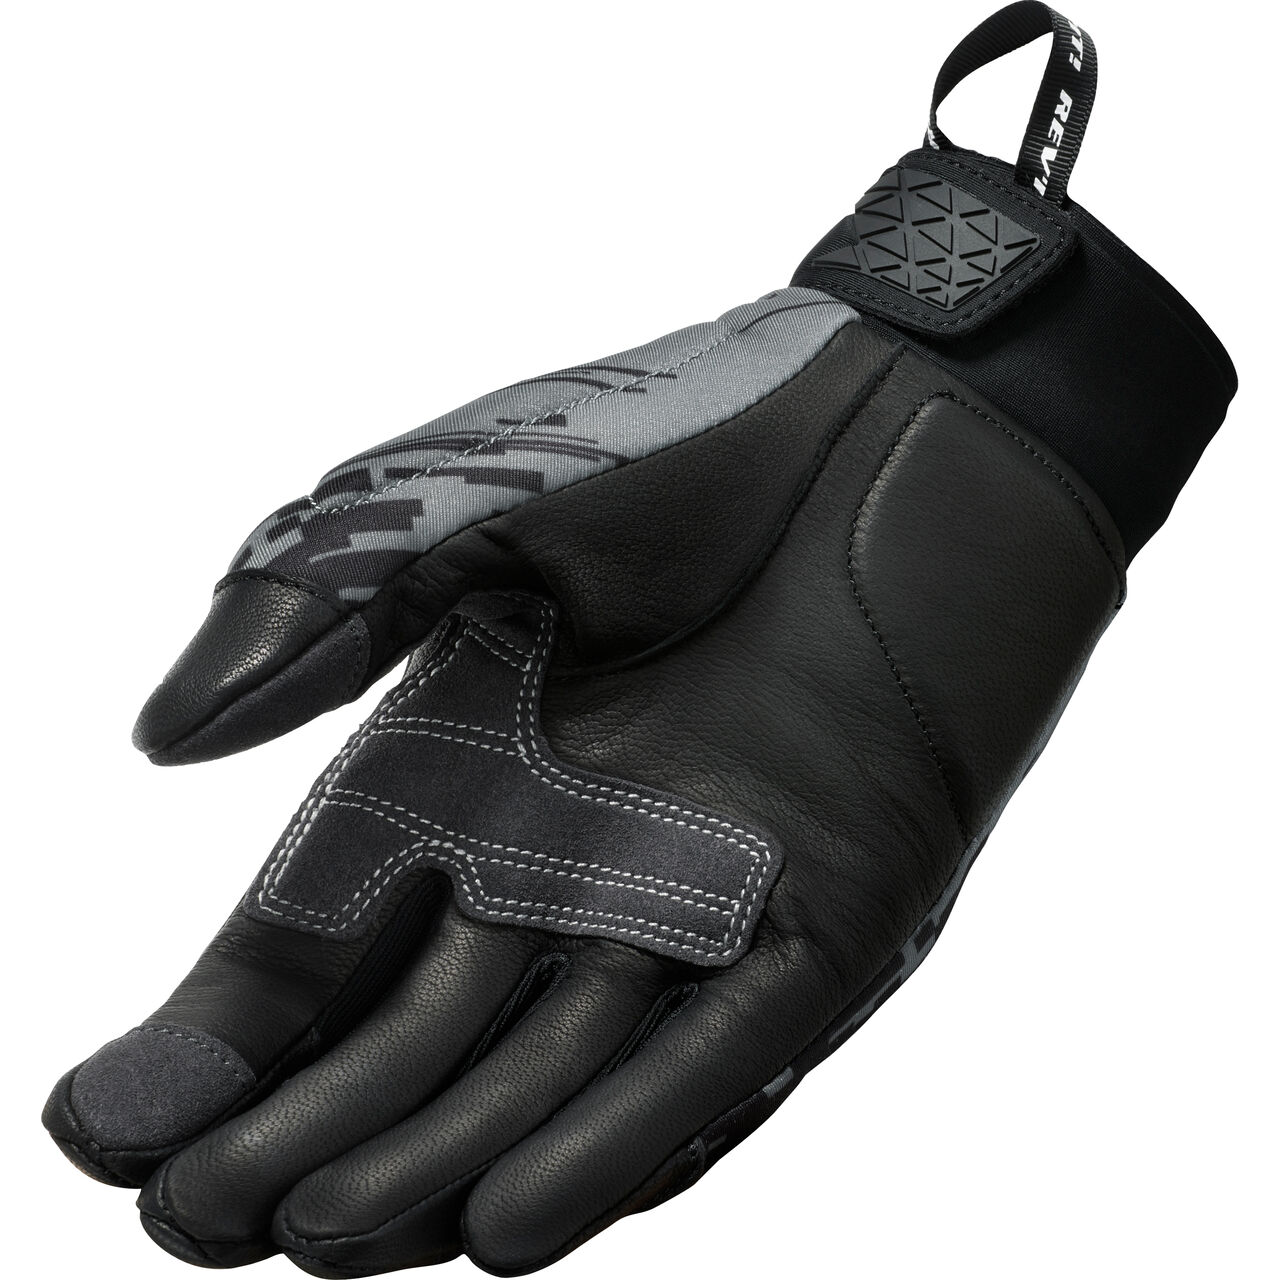 Spectrum Glove black/anthracite